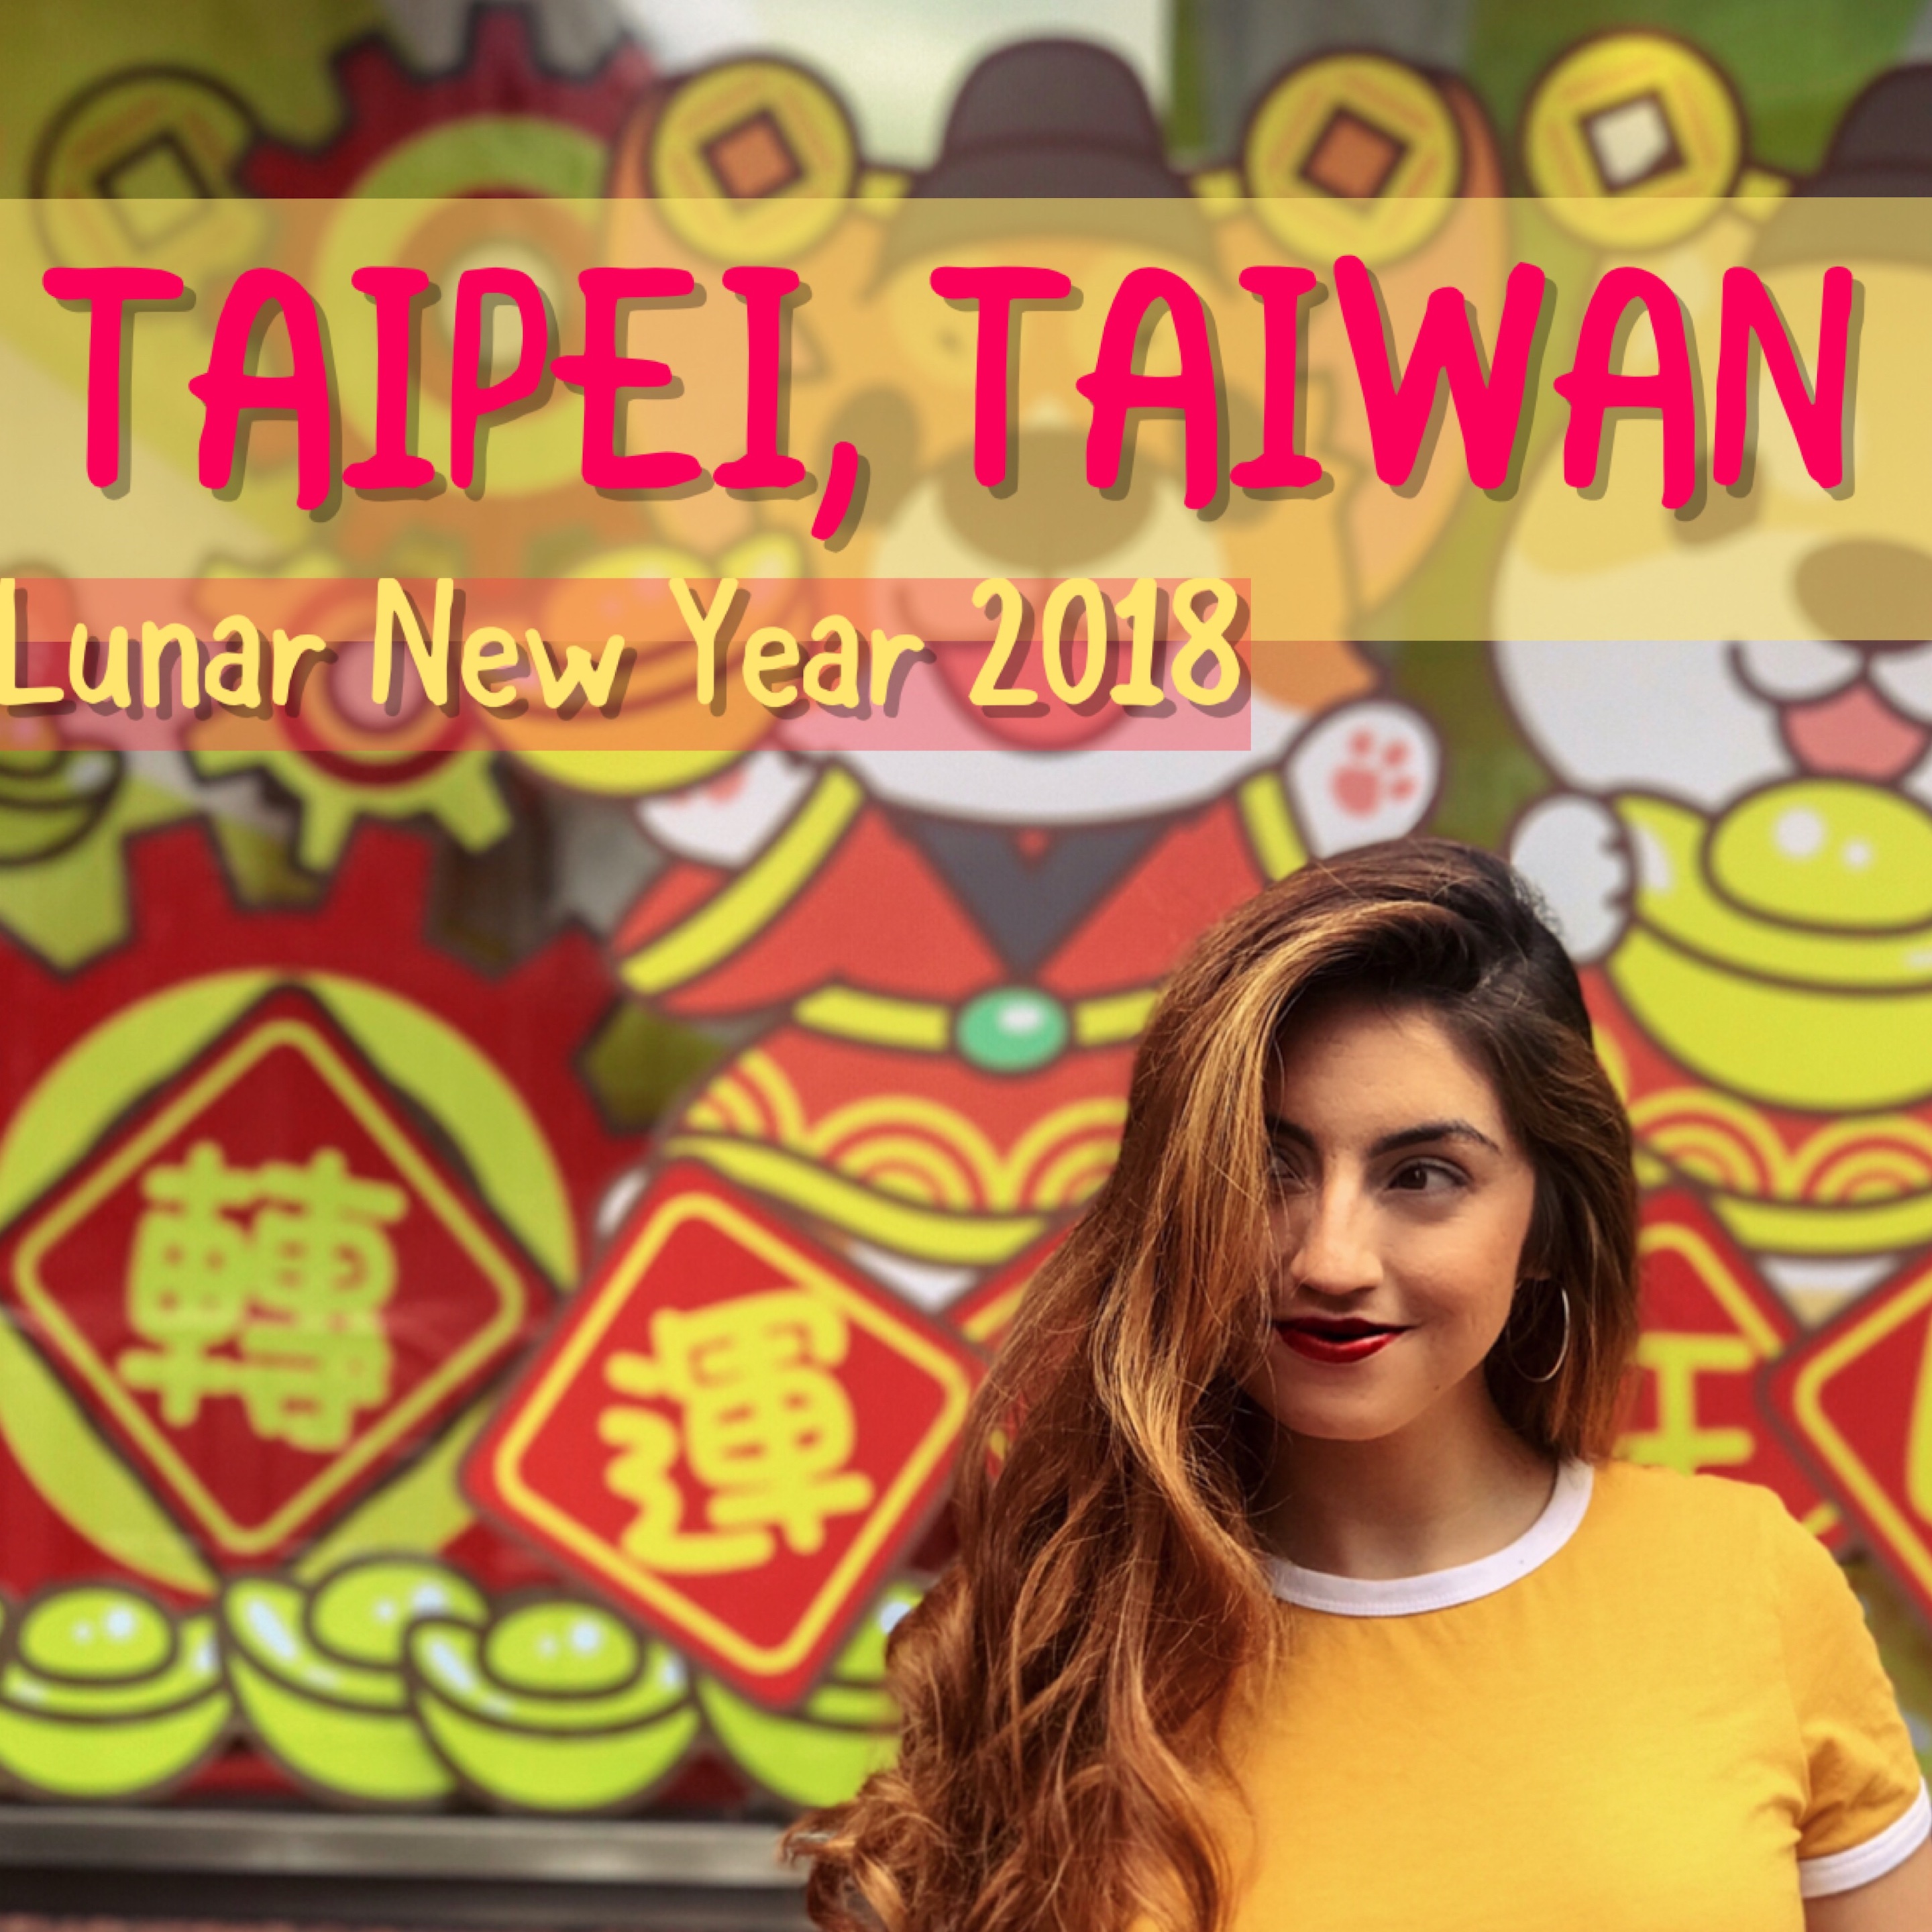 Taipei, Taiwan for Lunar New Year 2018